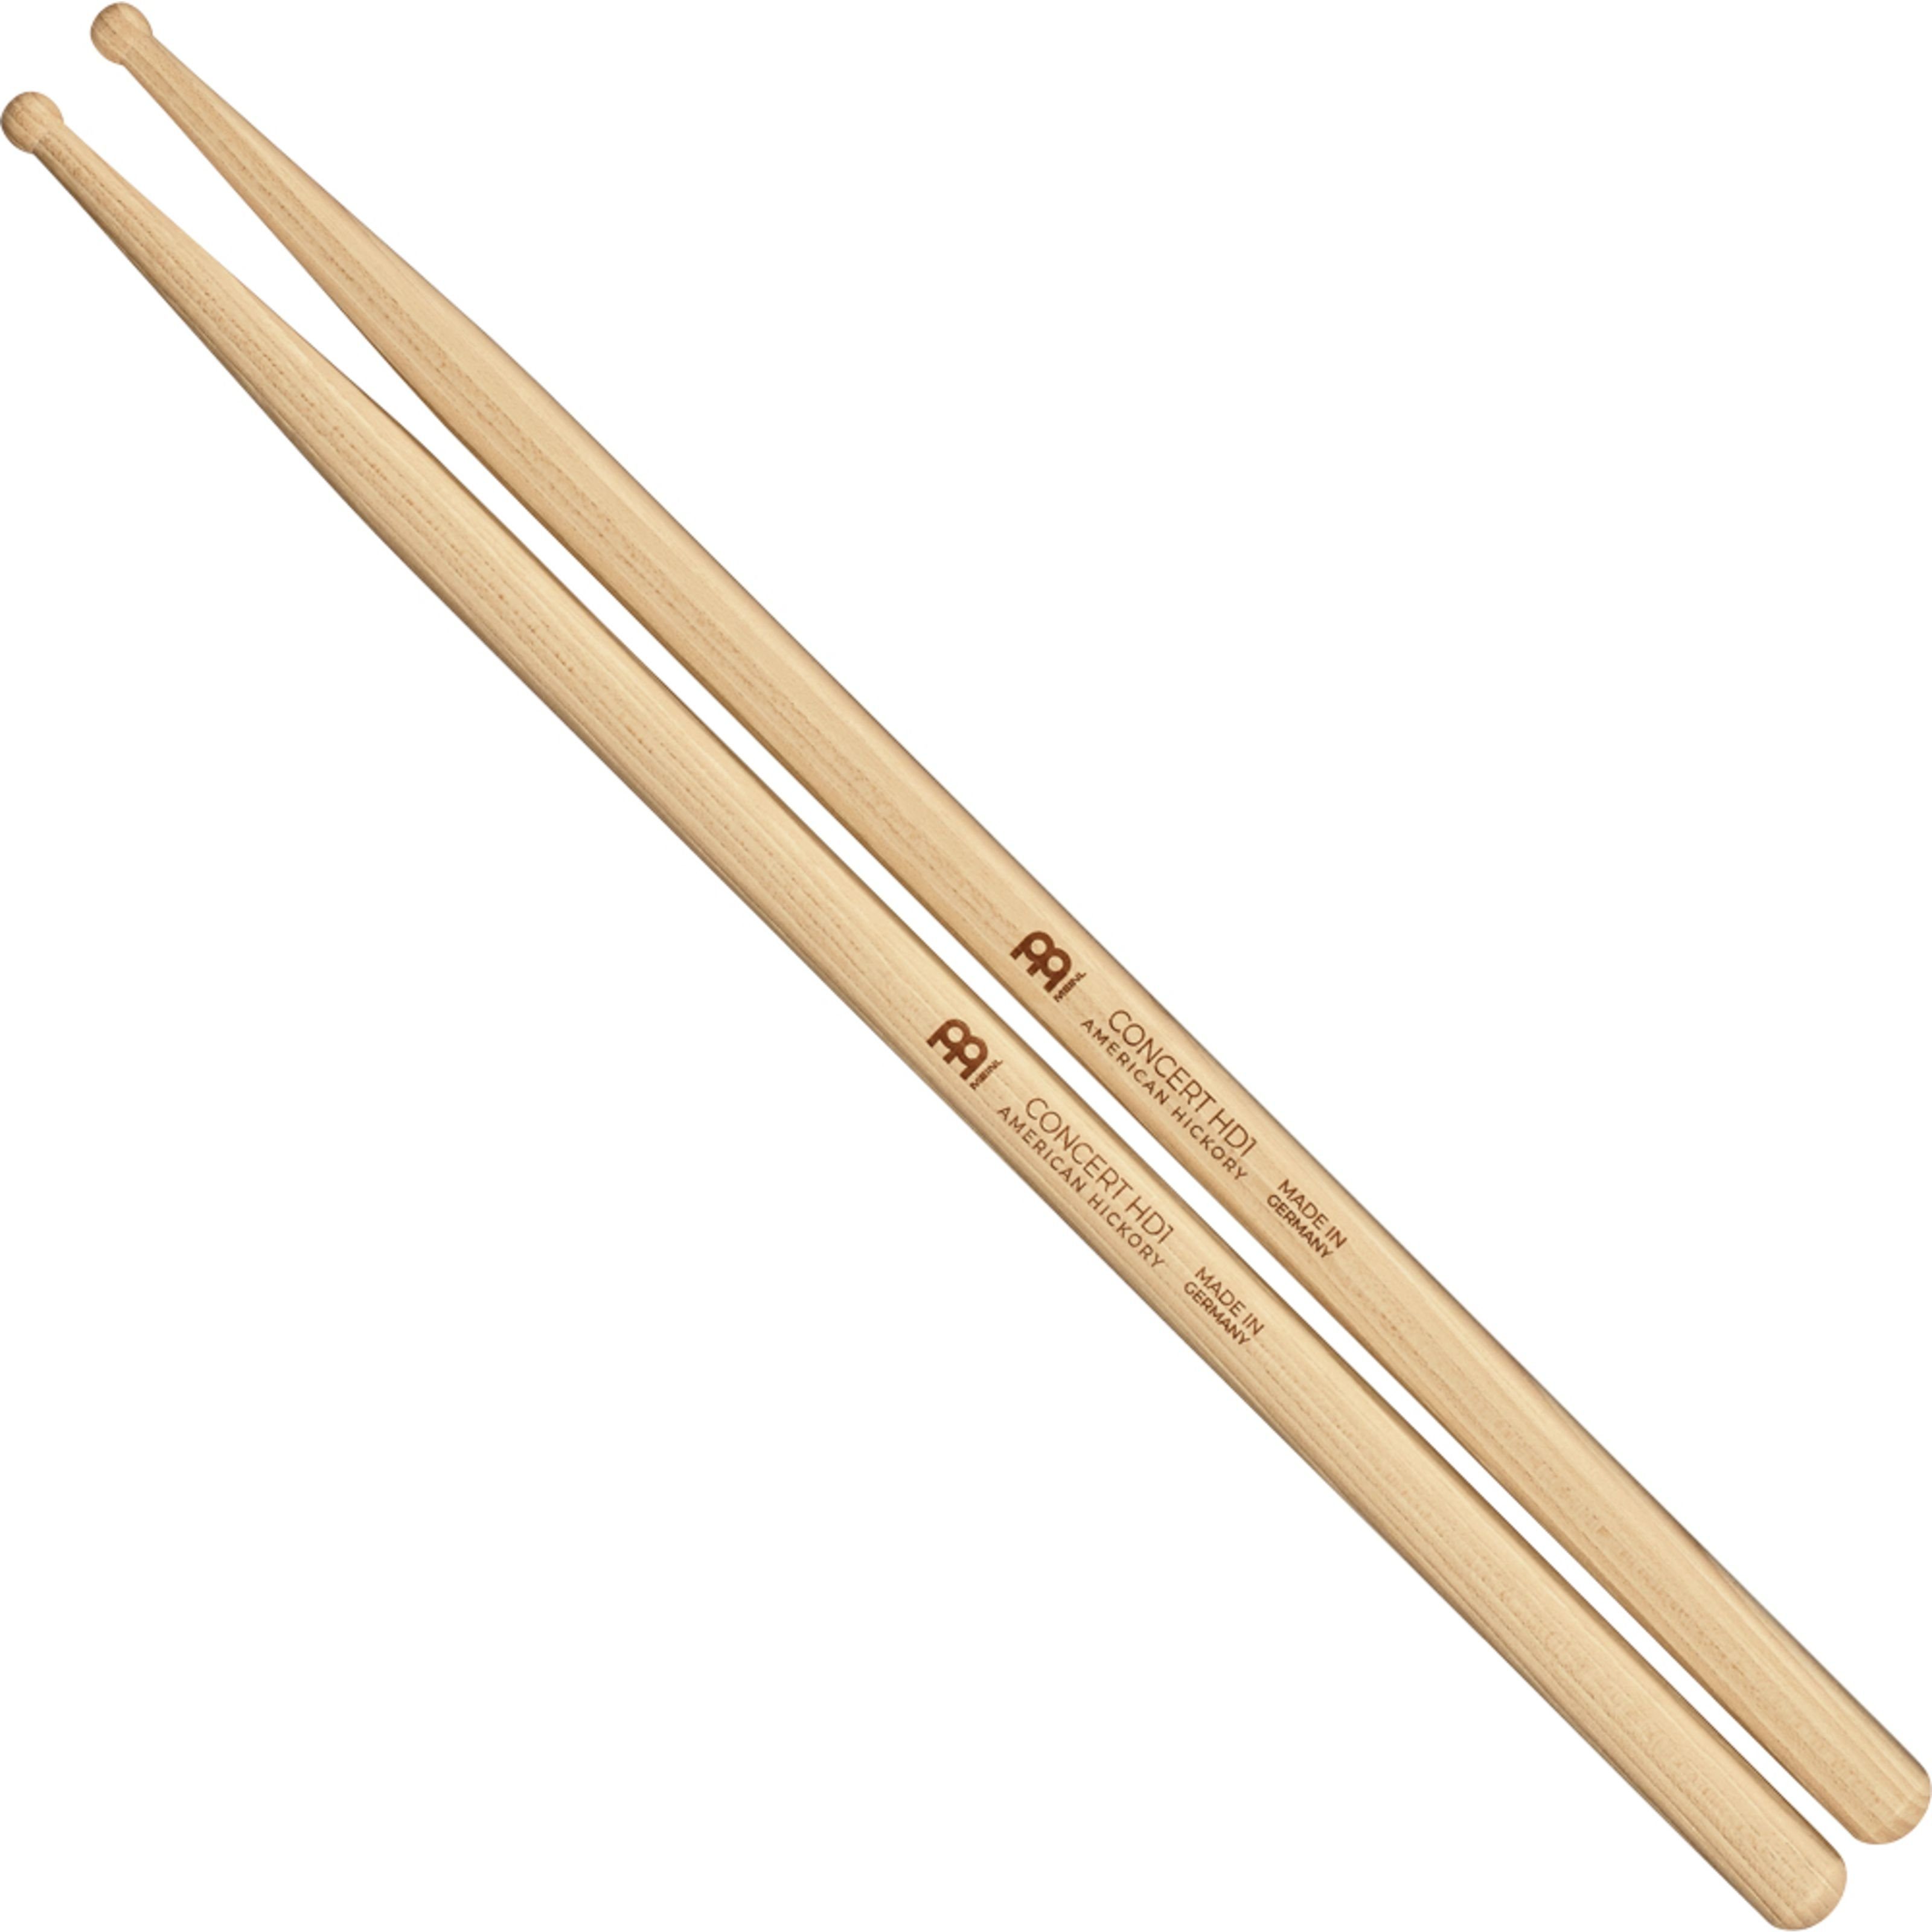 Meinl Percussion Spielzeug-Musikinstrument, SB129 Concert HD1 Sticks American Hickory - Drumsticks